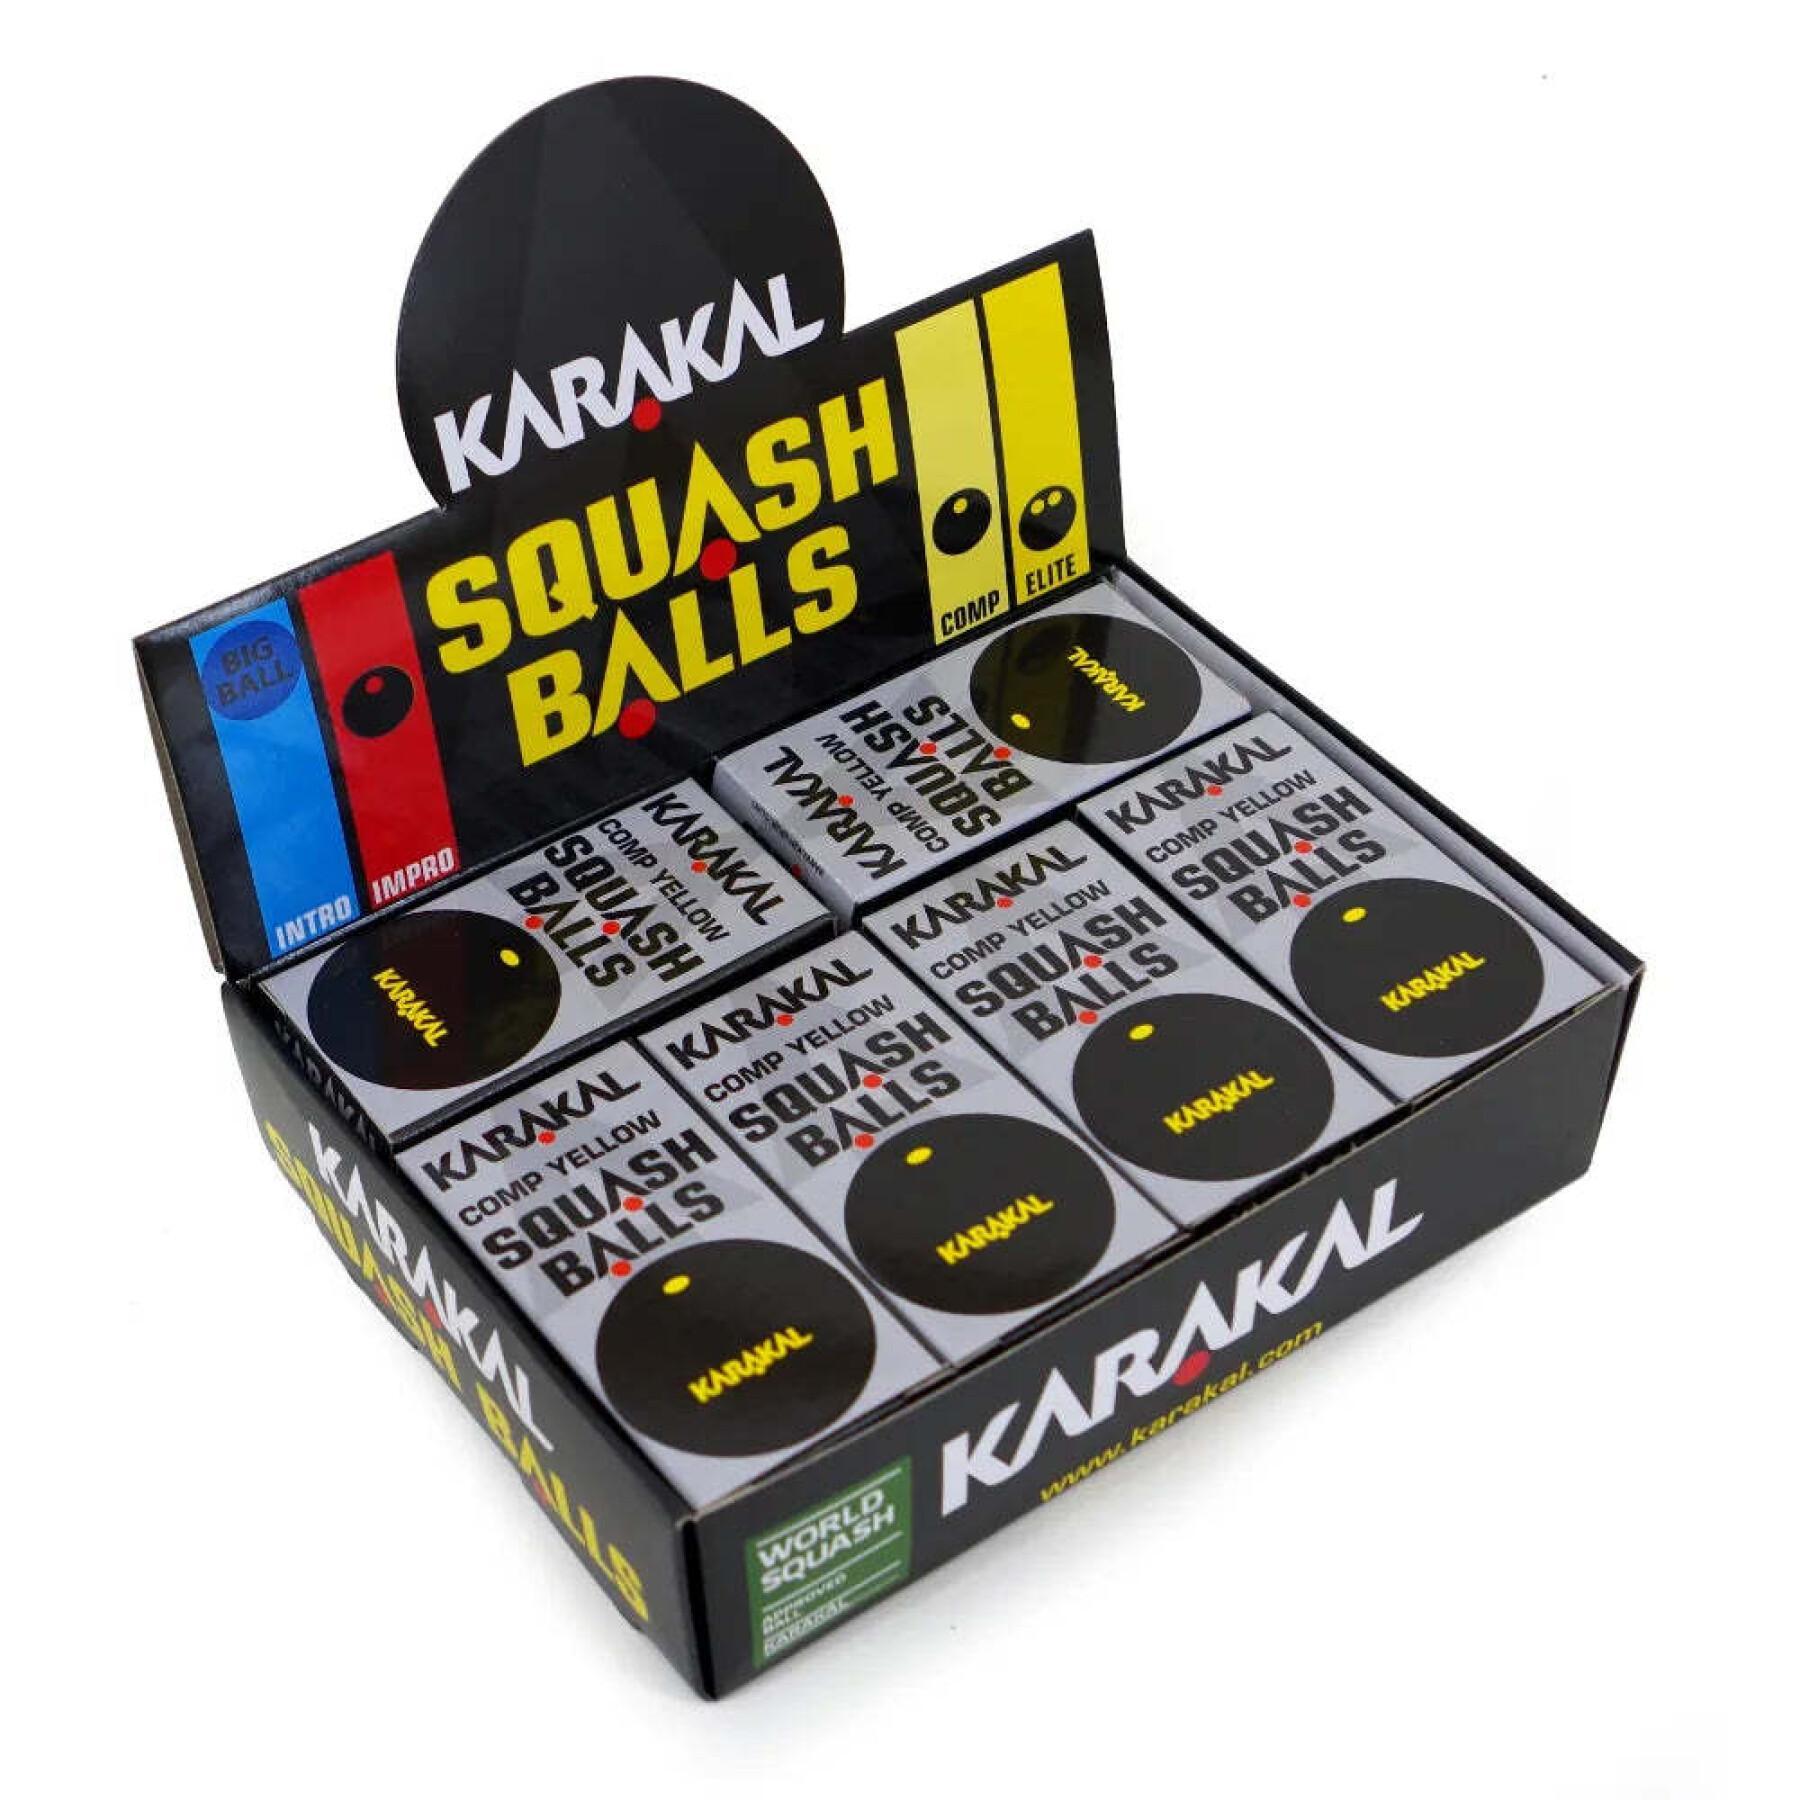 Confezione da 12 palline da tennis Karakal